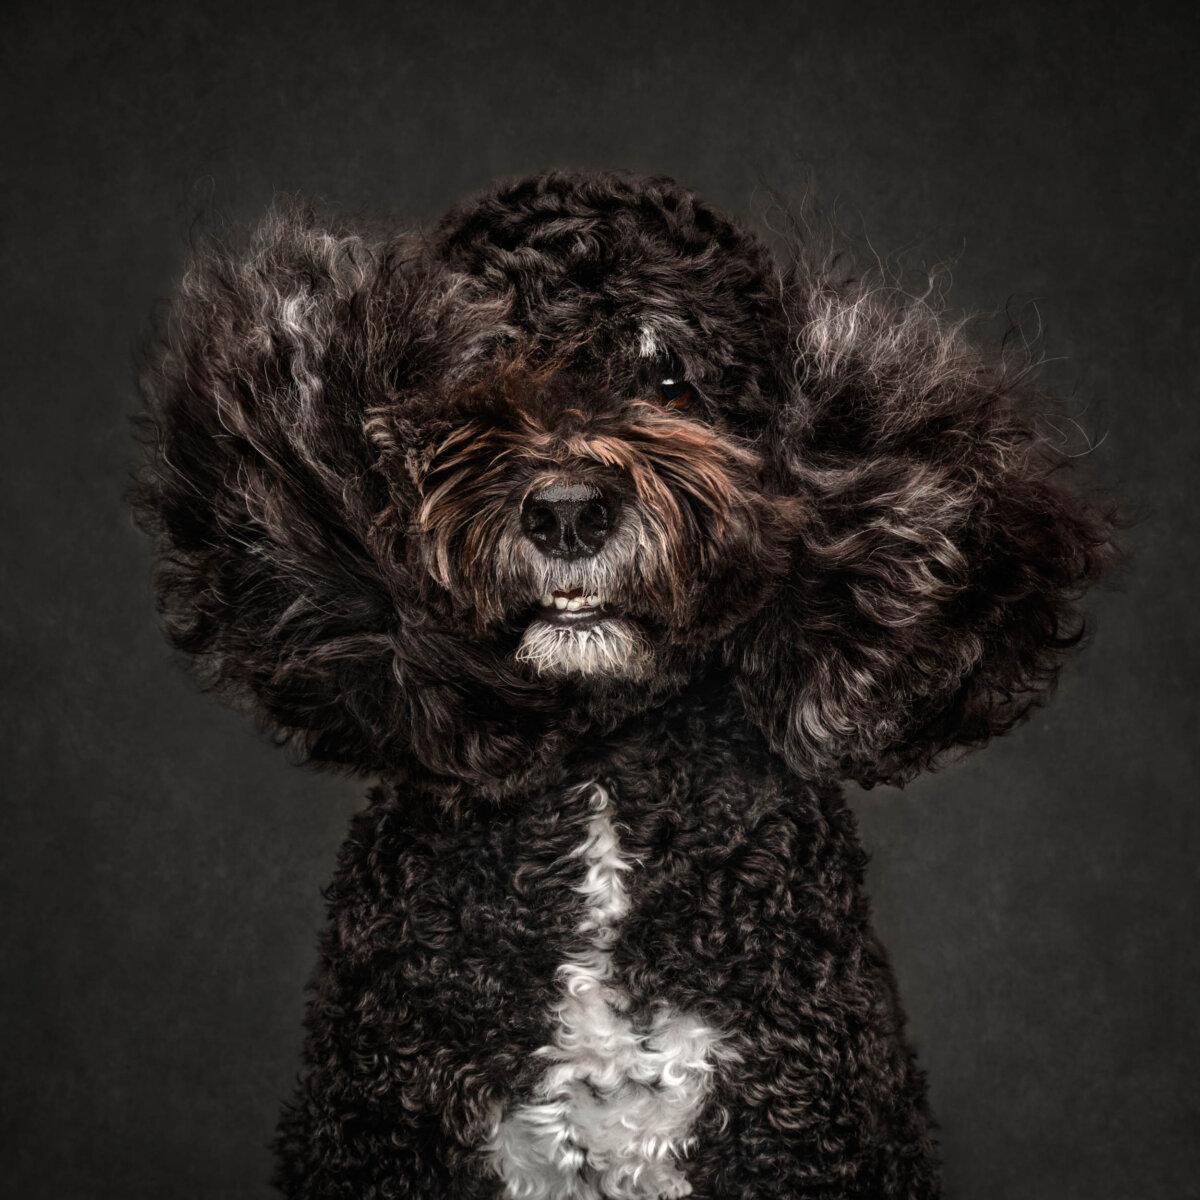 “Ebony & Her Ivories” by Jane Thomson. (Courtesy of Jane Thomson, Dog Photography Awards)